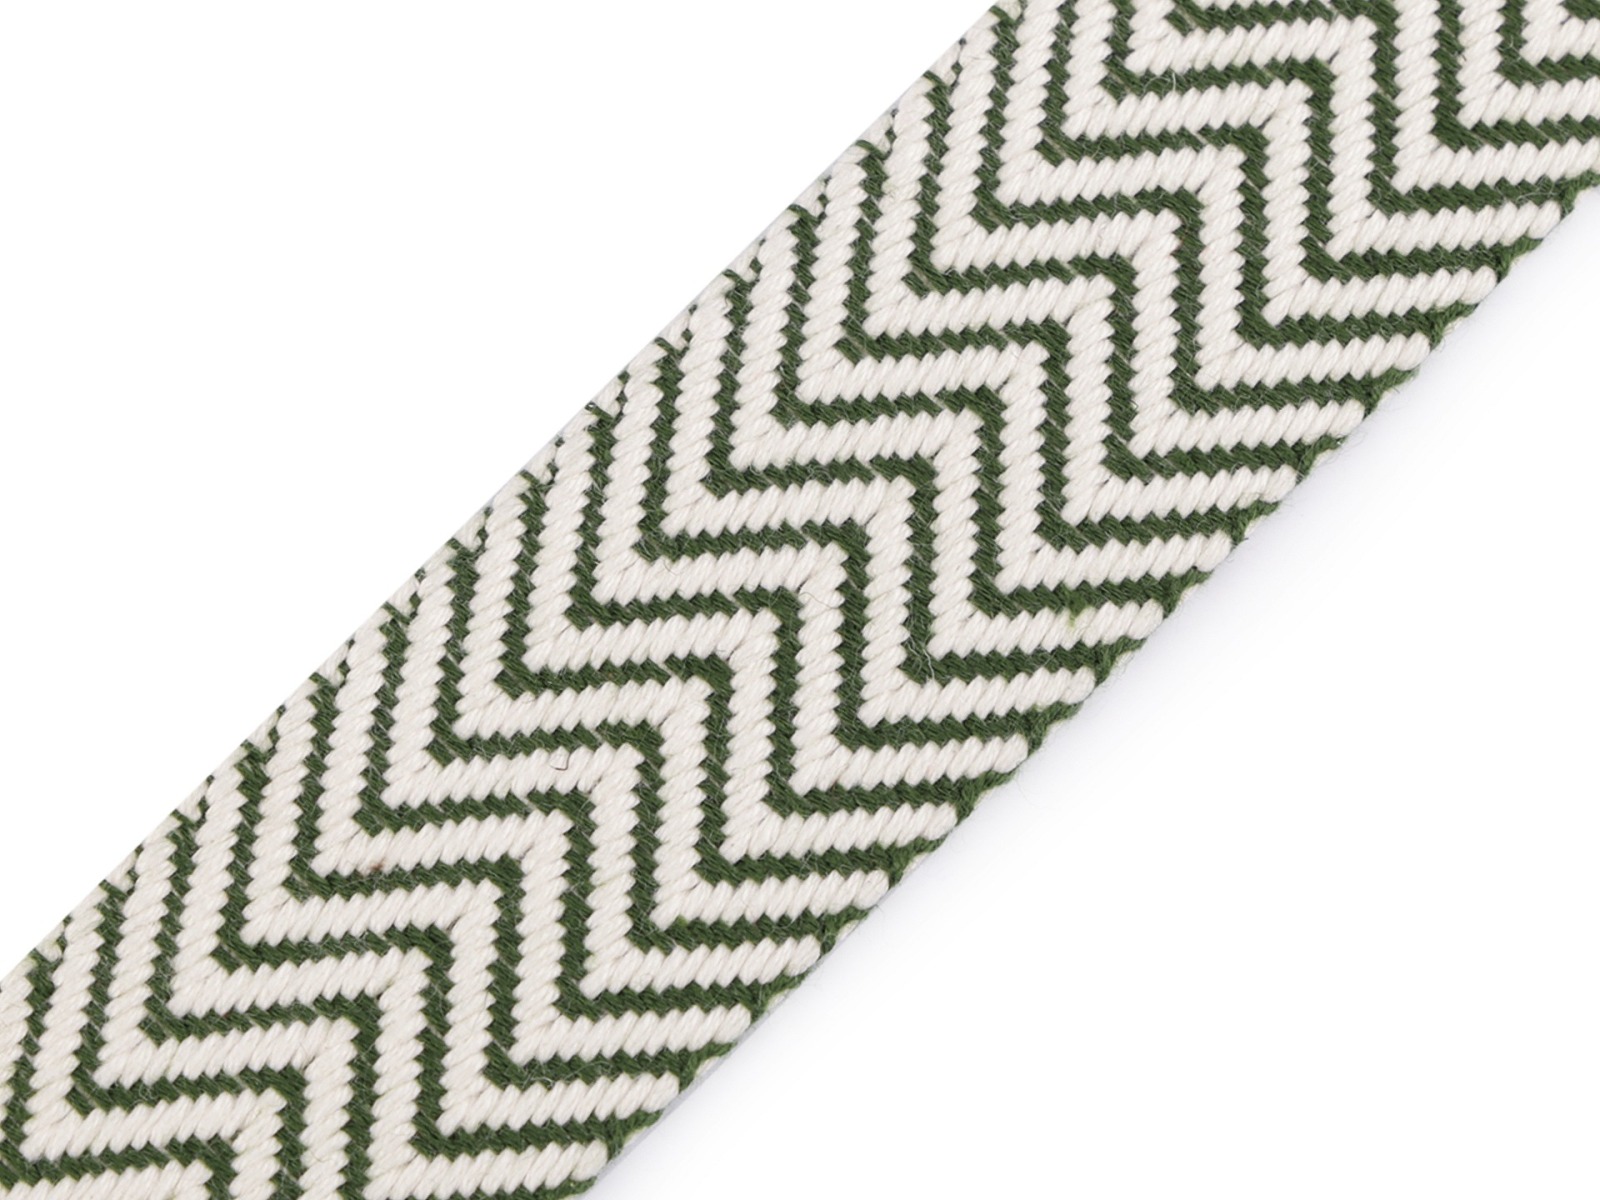 Gurtband 250 EUR/m Baumwolle beidseitig gemustert natur grün Zickzack 38 mm 1 Meter